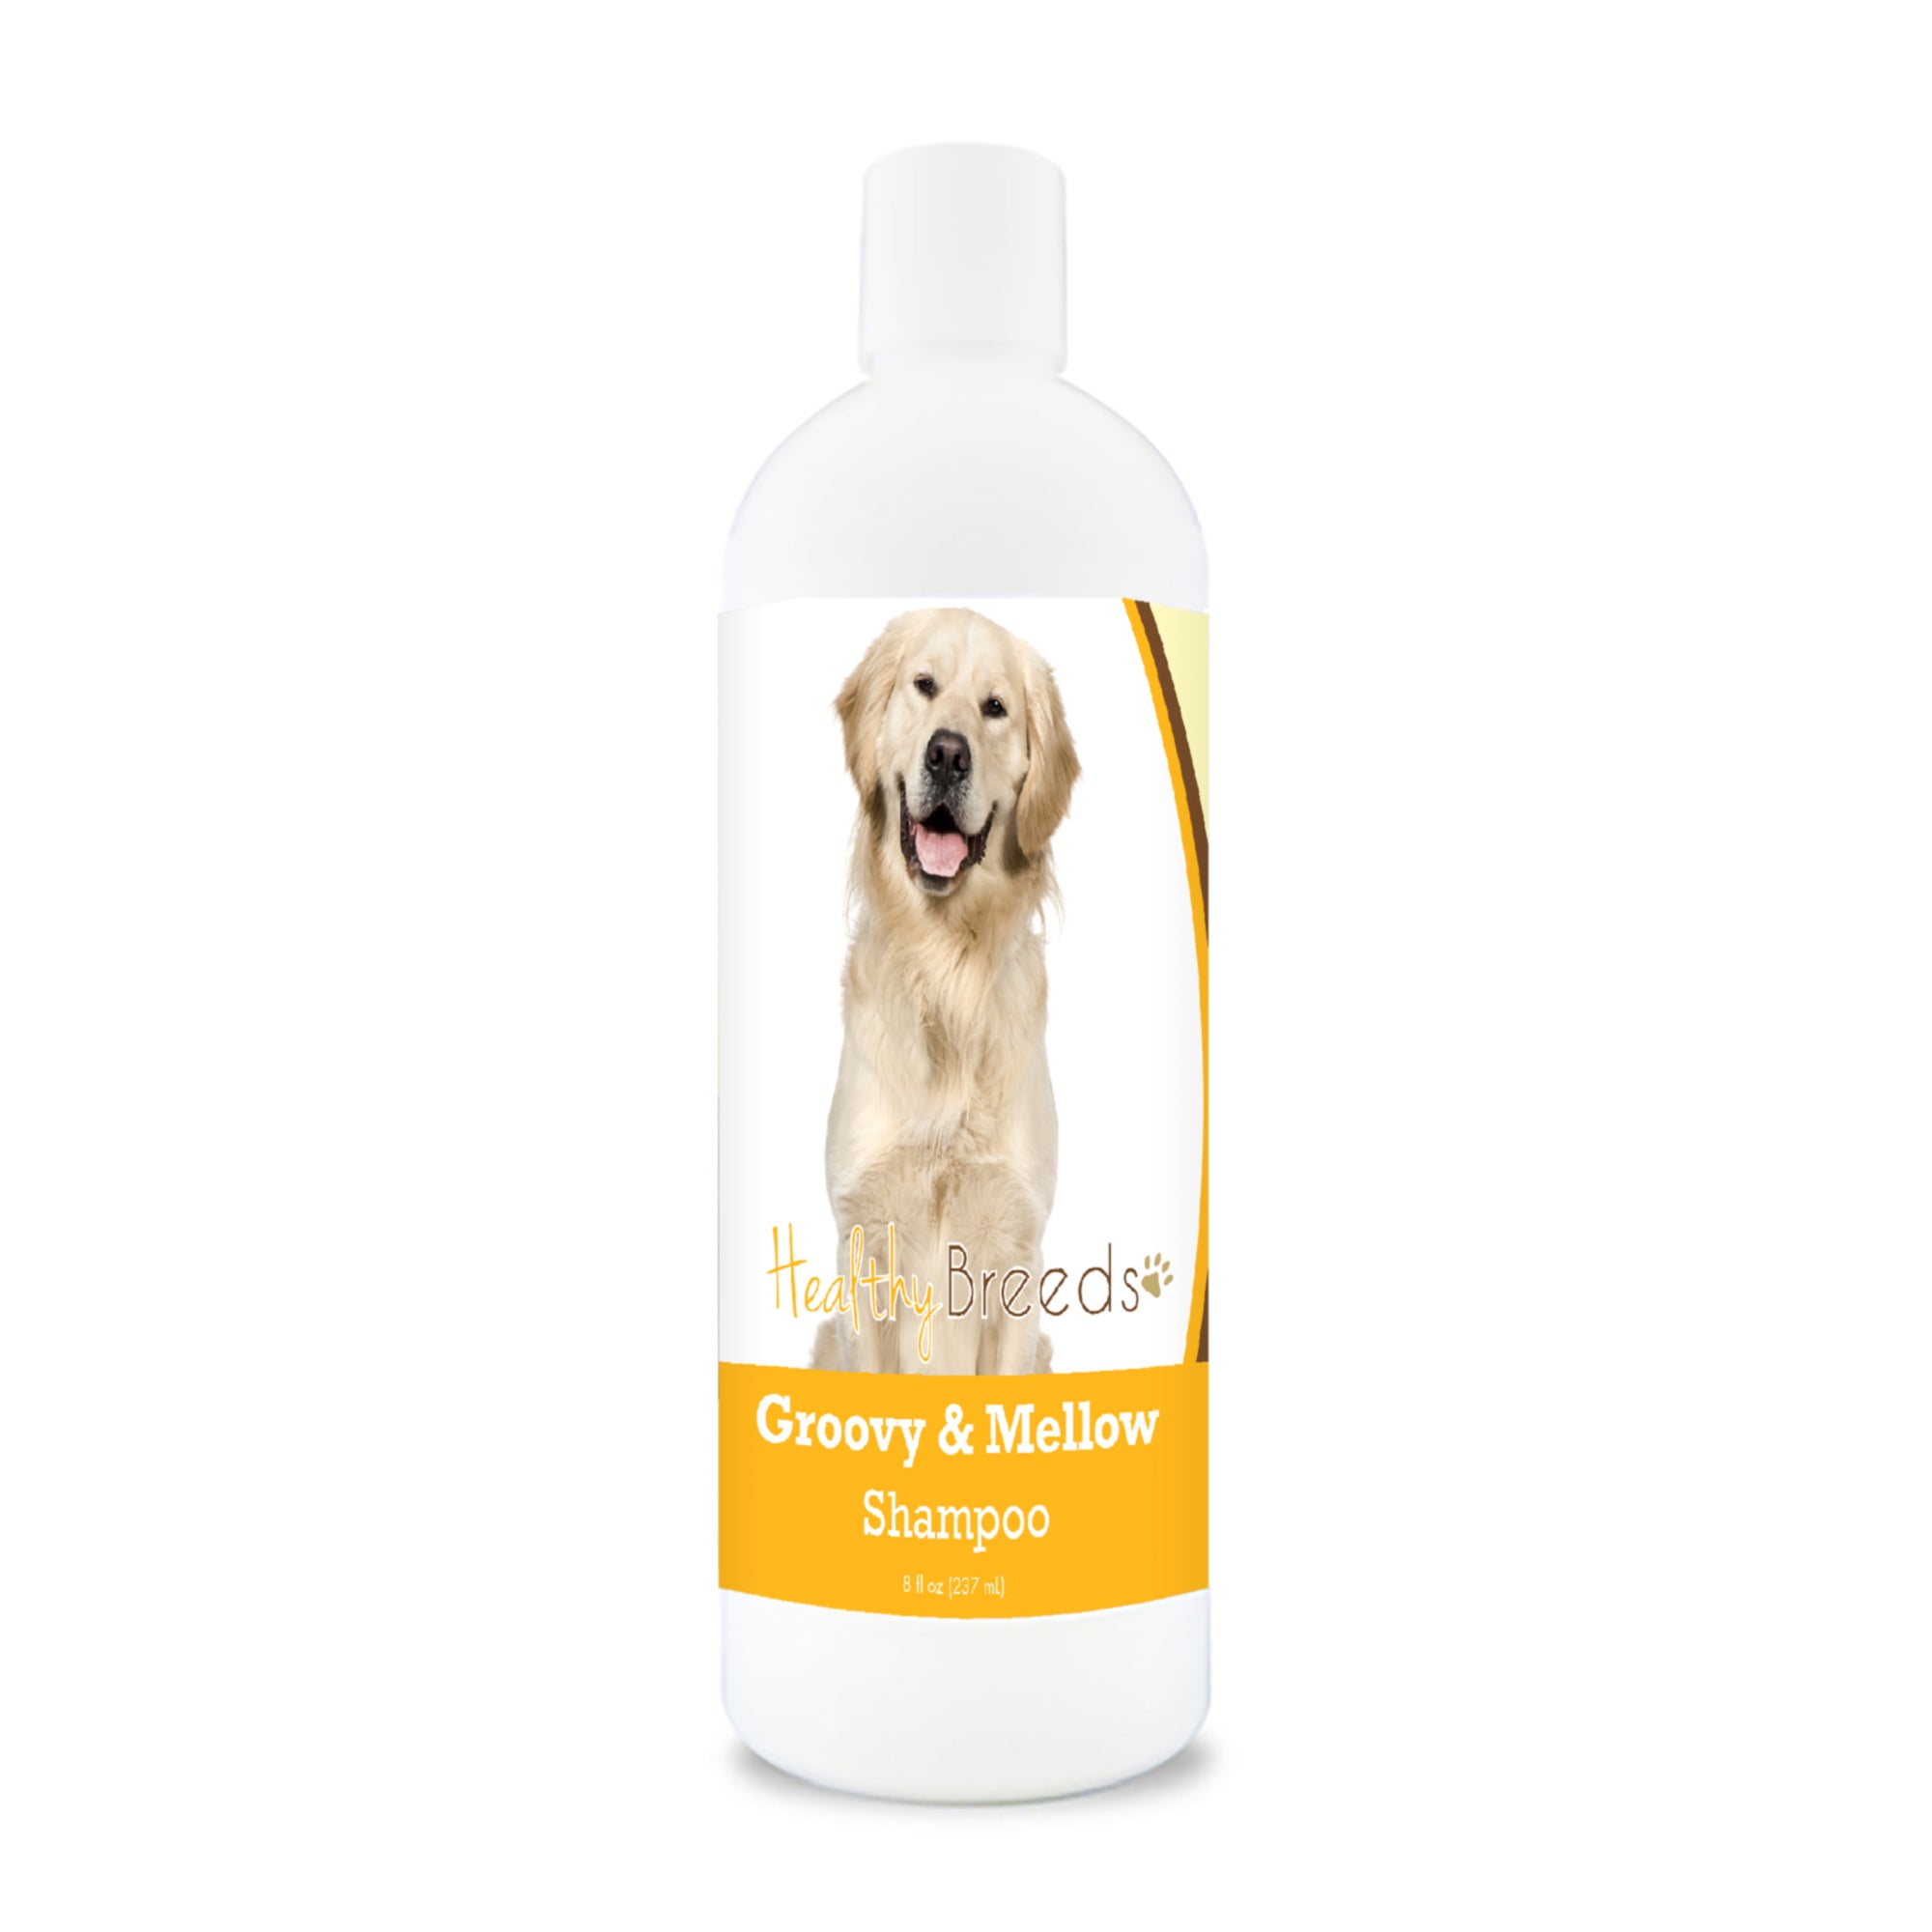 Golden Retriever Groovy & Mellow Shampoo 8 oz